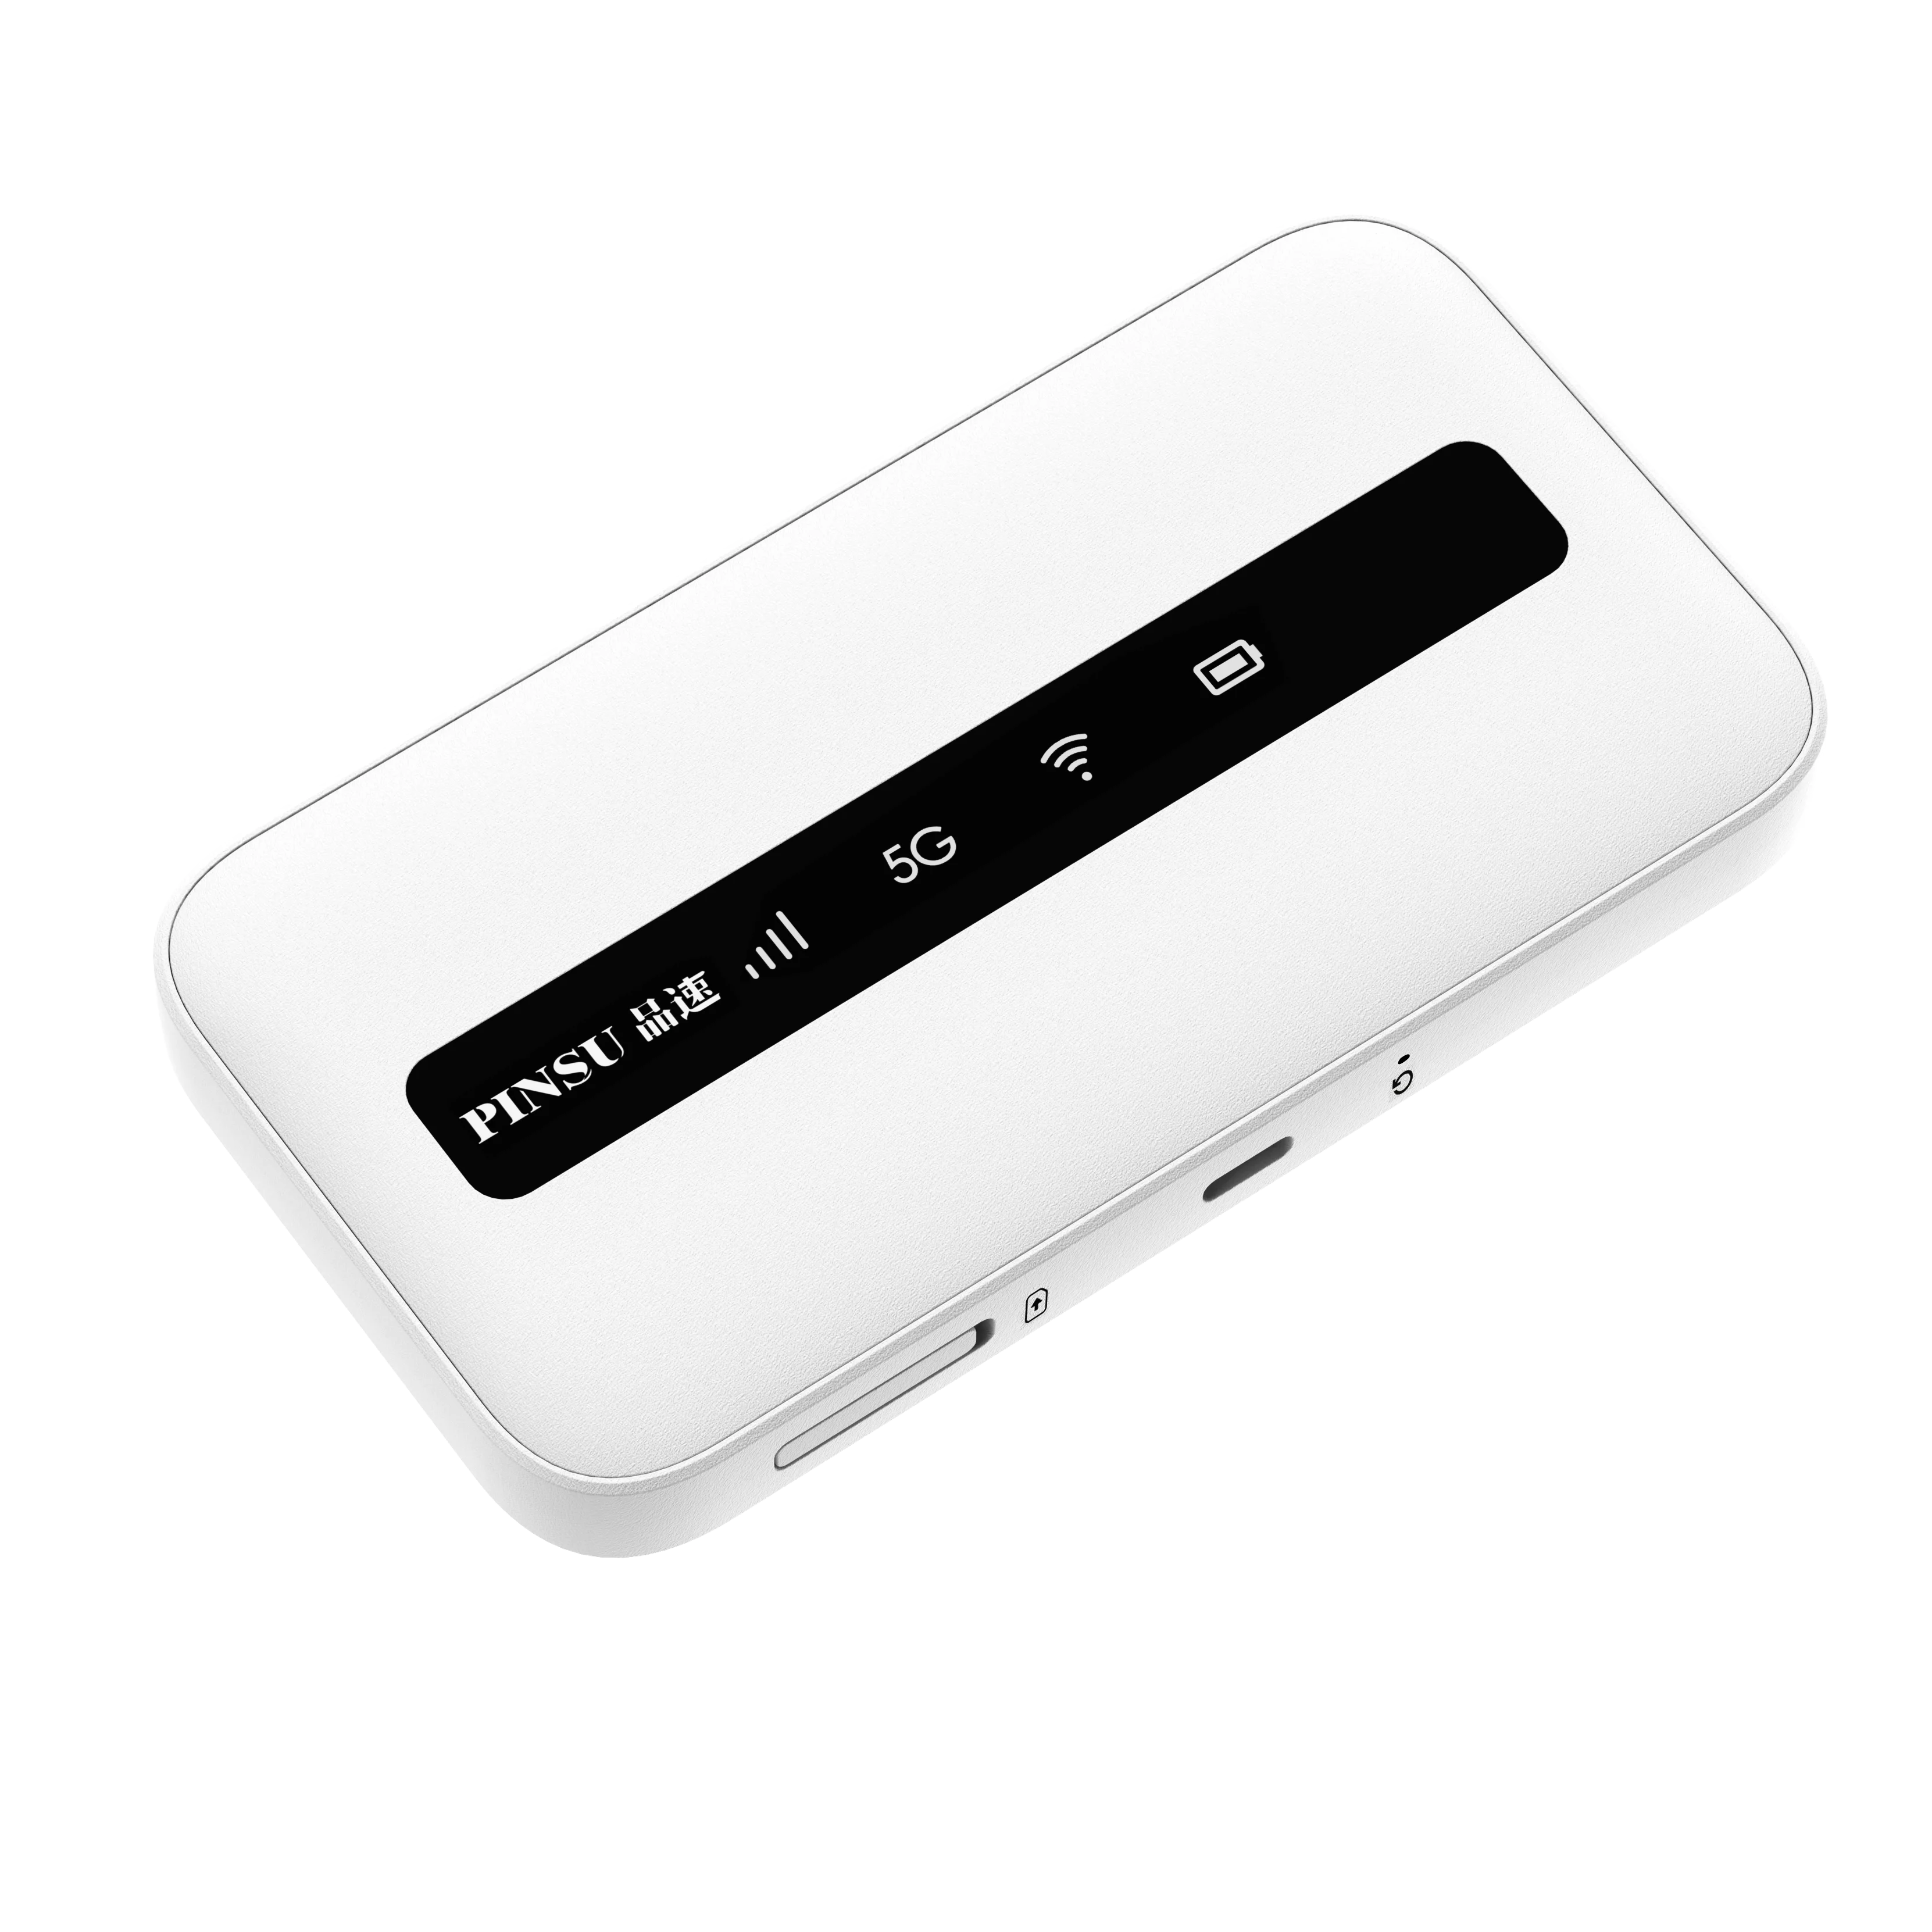 1× Pocket Router WiFi 5G Portable Wireless Mobile Hotspot Built-In 3600mAh  White